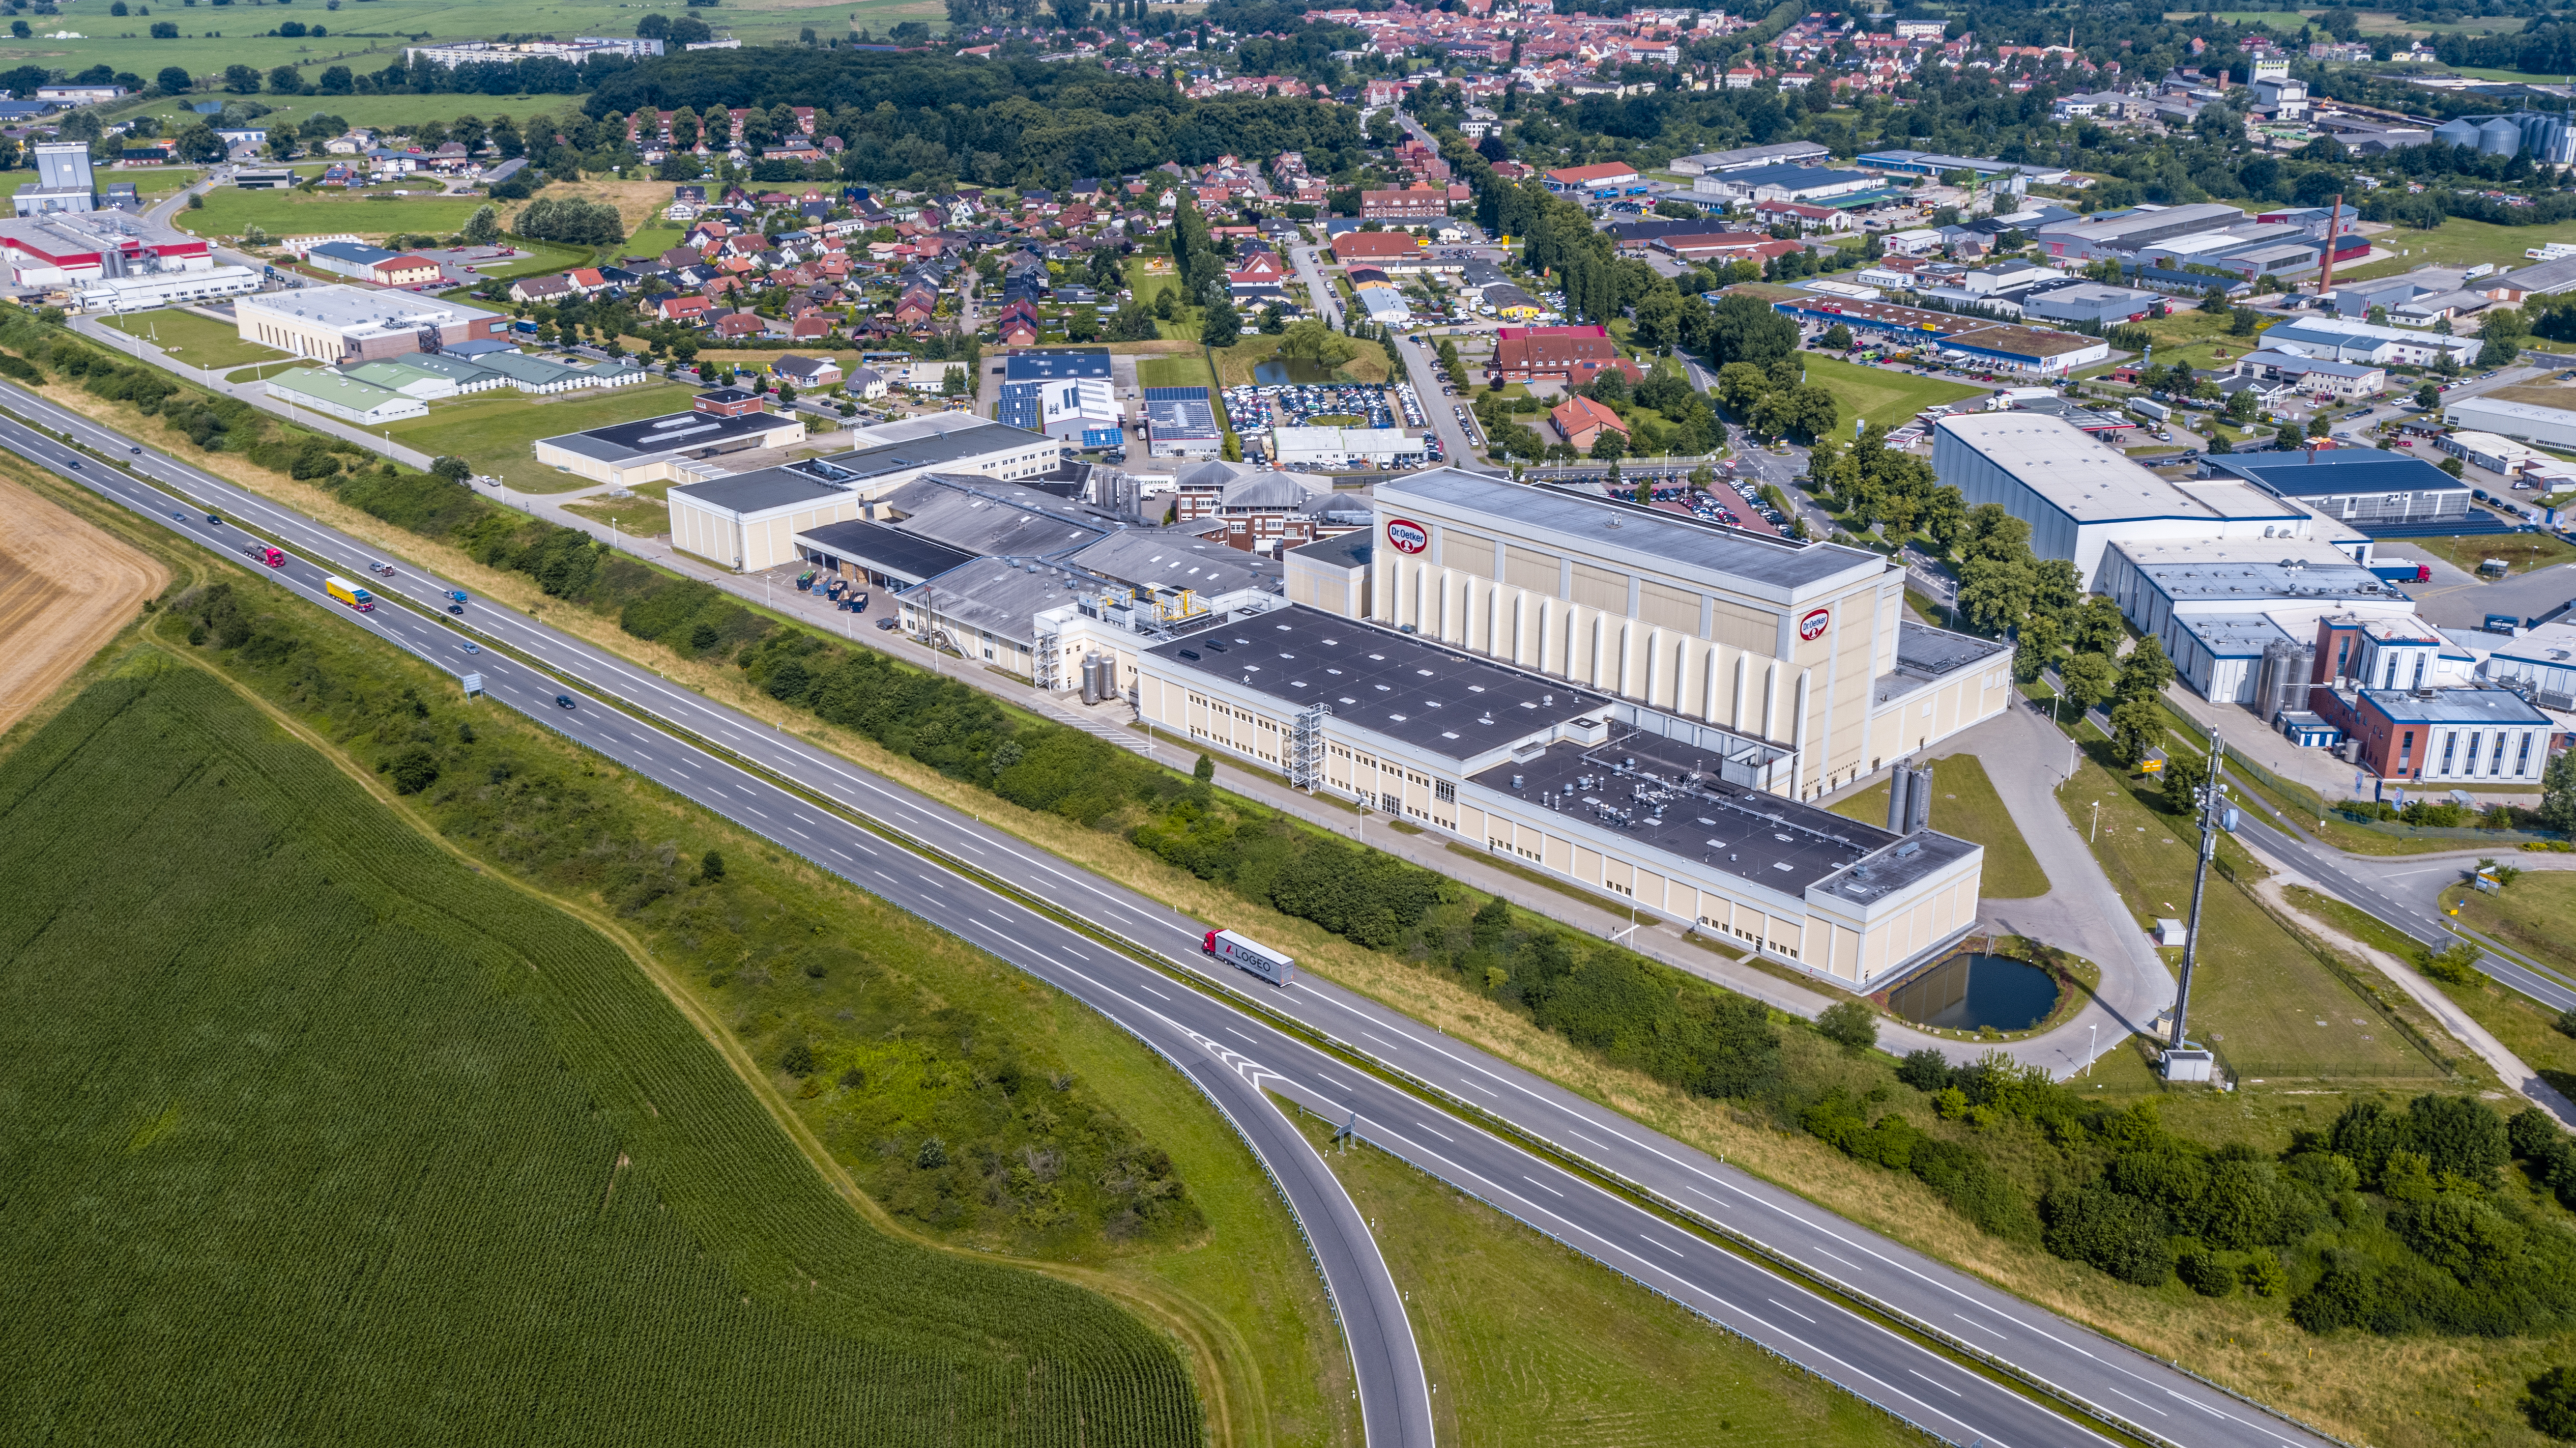 Dr. Oetker Plant Wittenburg Aerial View